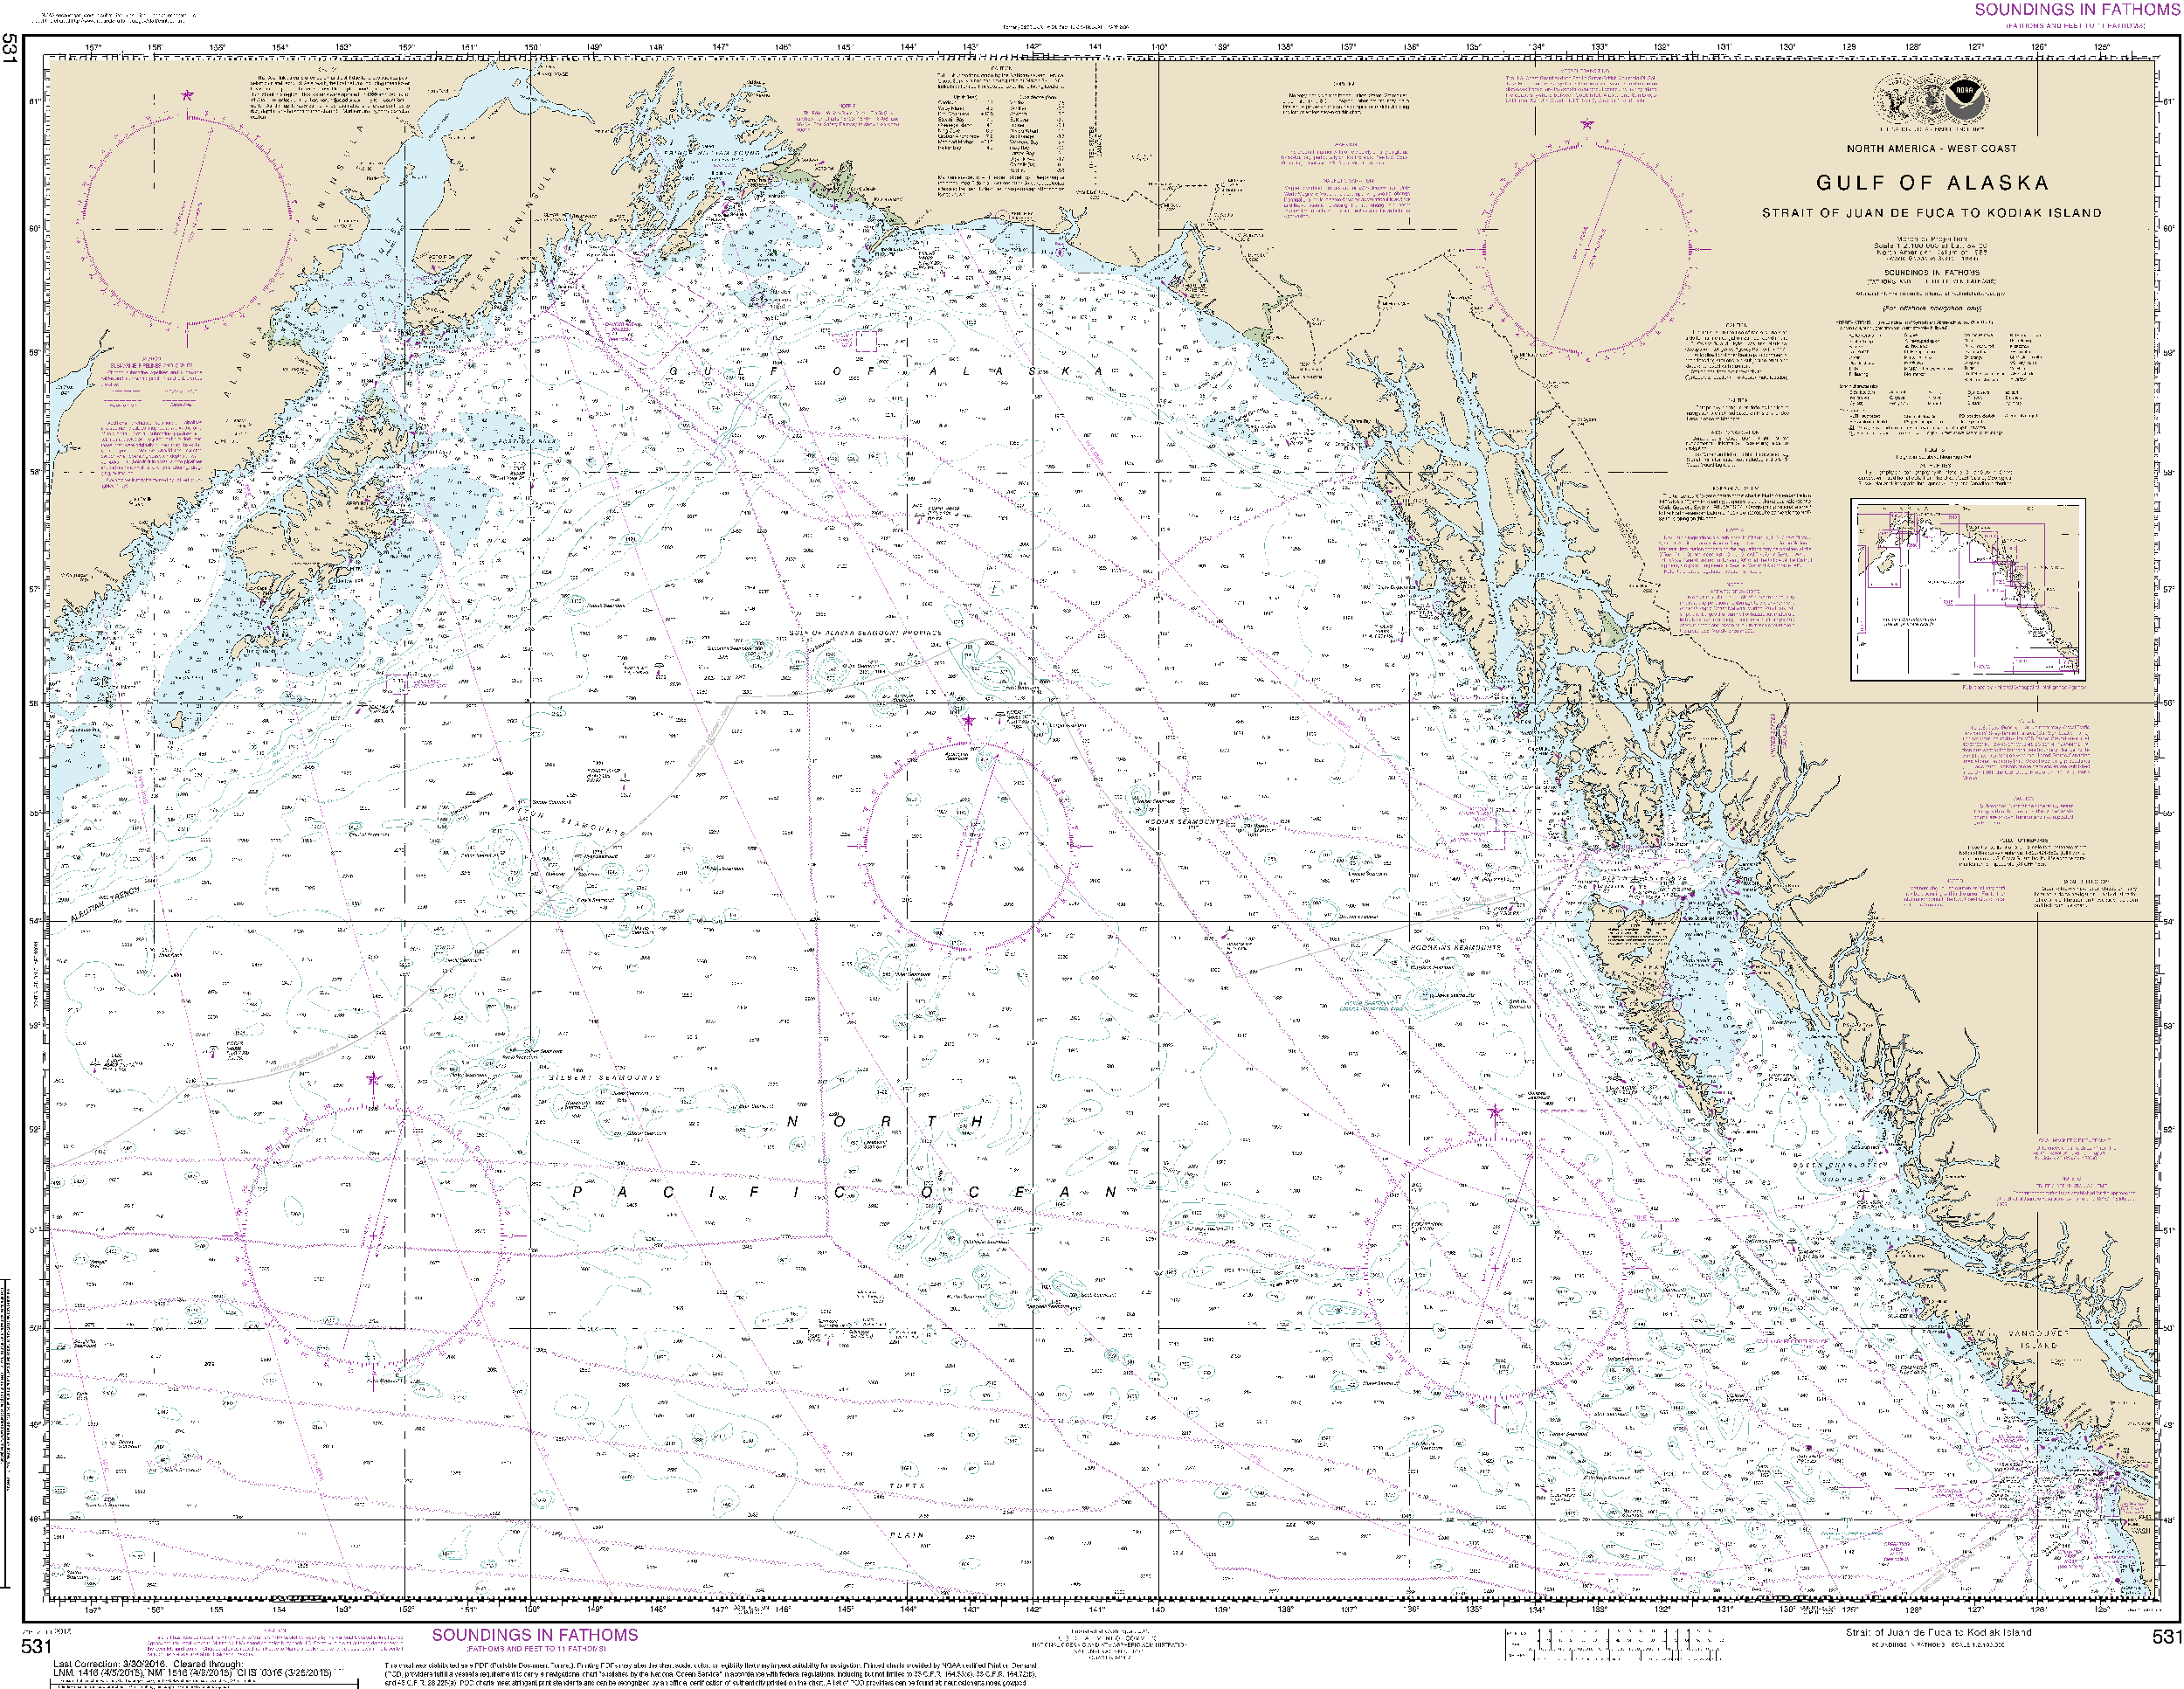 NOAA Nautical Chart 531: Gulf of Alaska Strait of Juan de Fuca to Kodiak Island